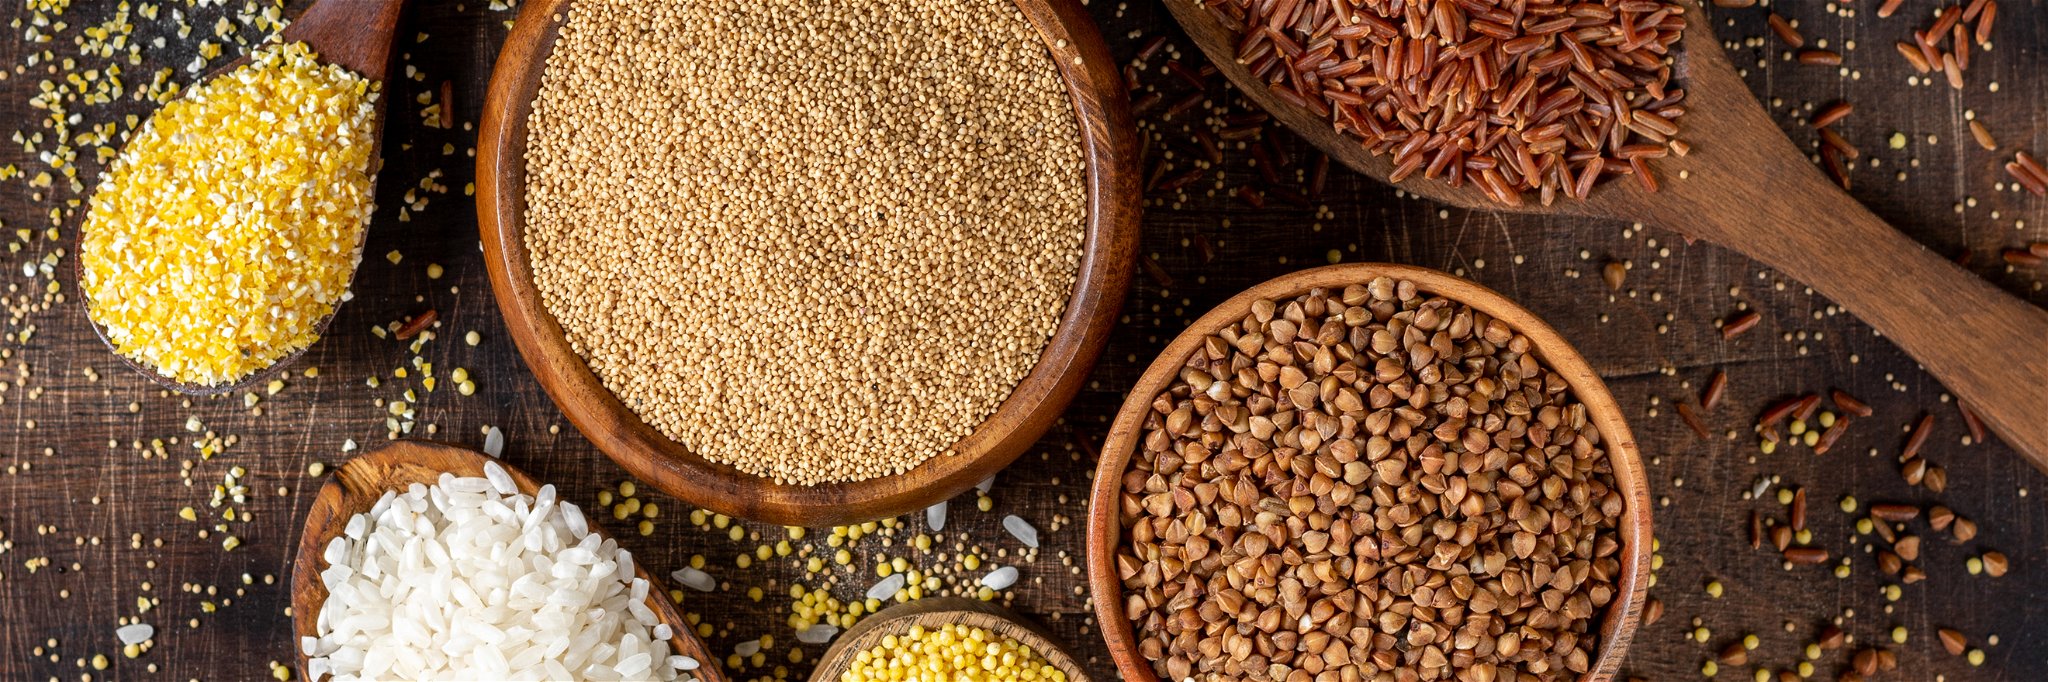 Six Alternative Grains beyond Wheat